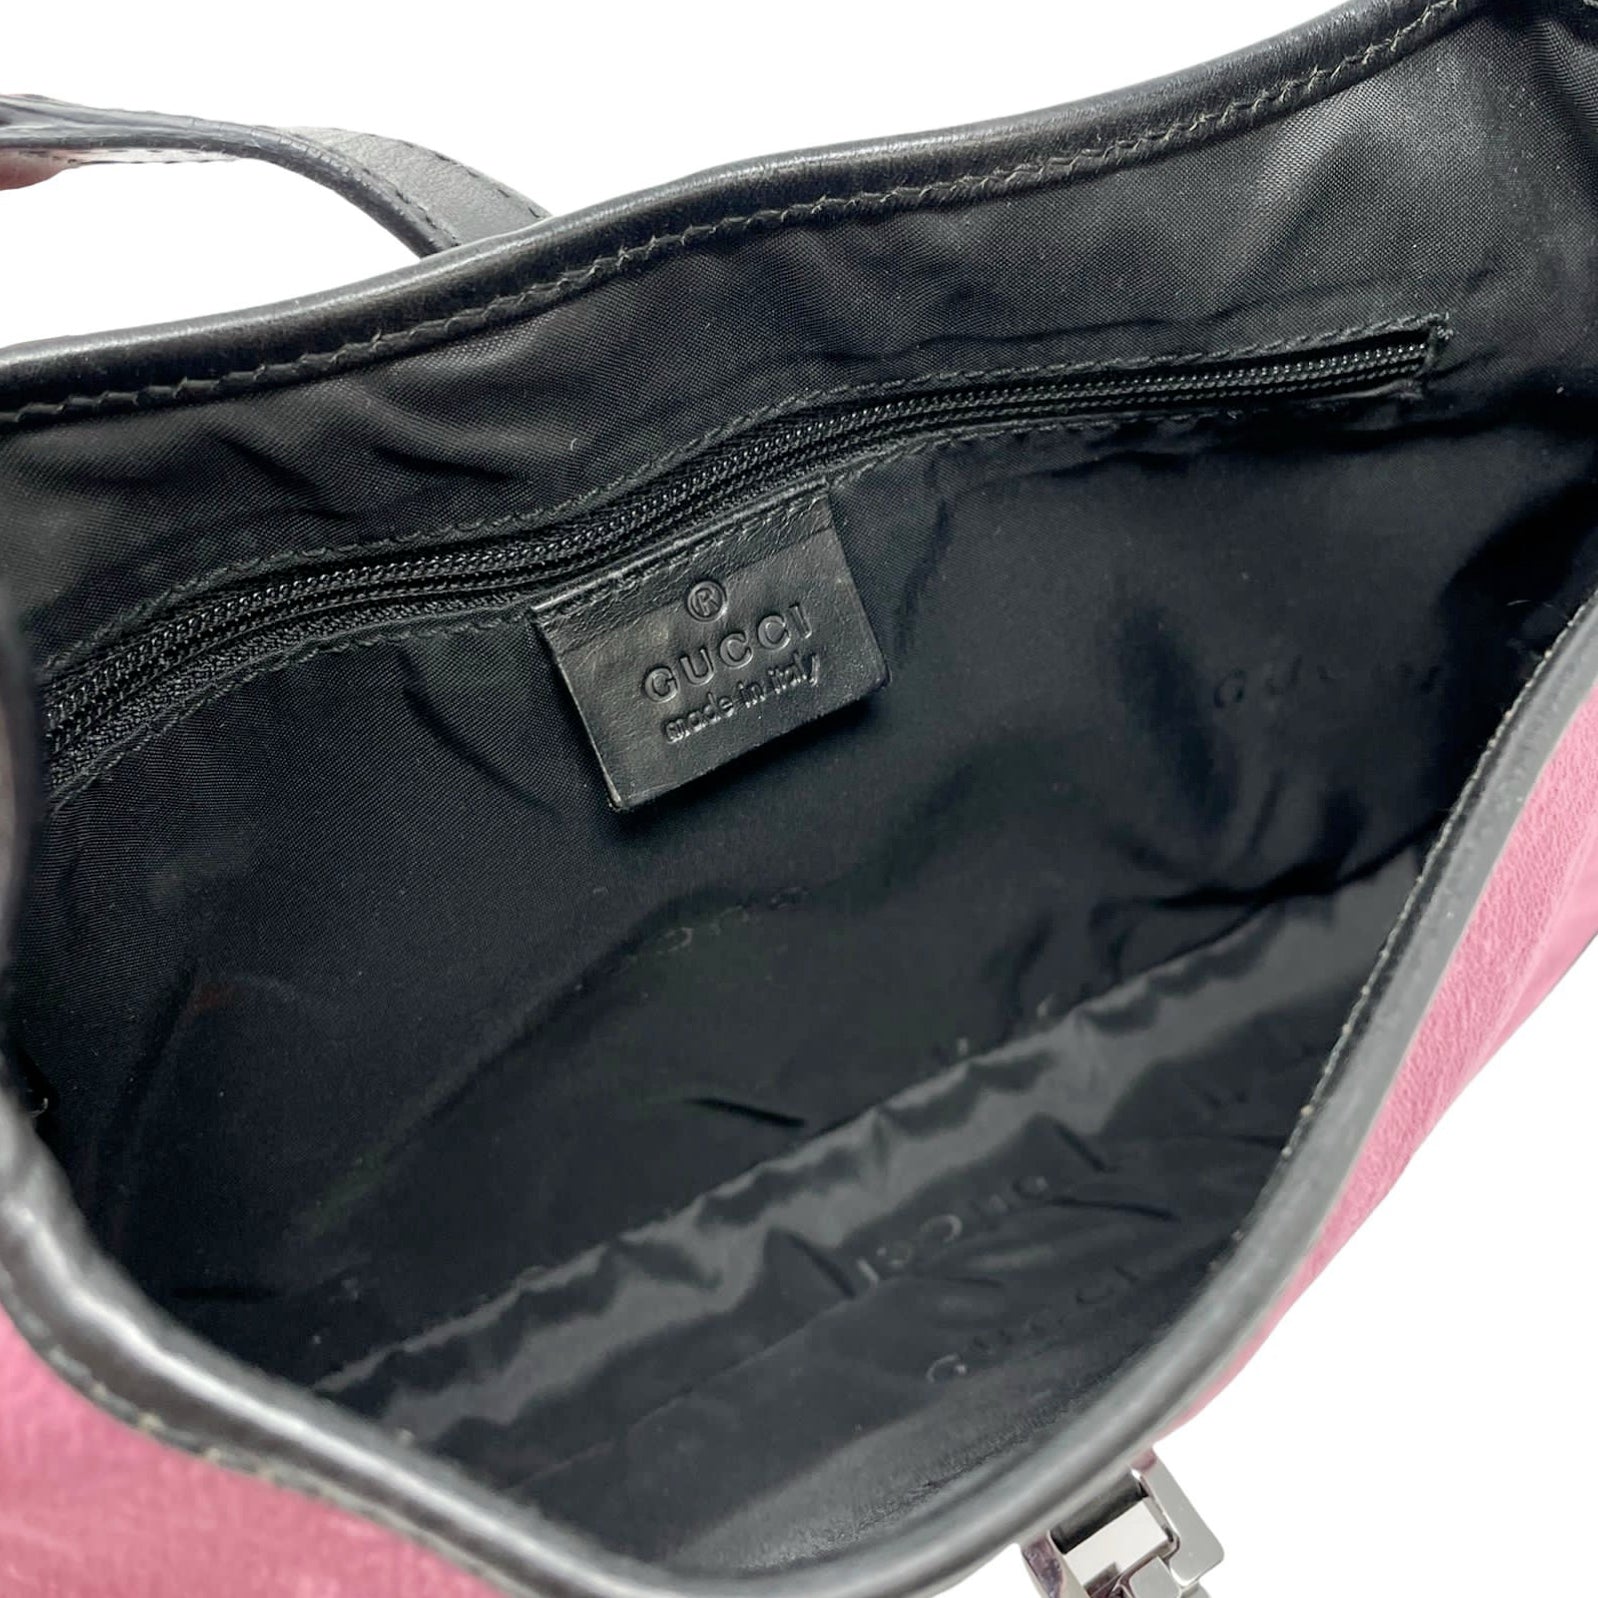 Gucci Pink Mini Velvet Jackie Bag - Handbags